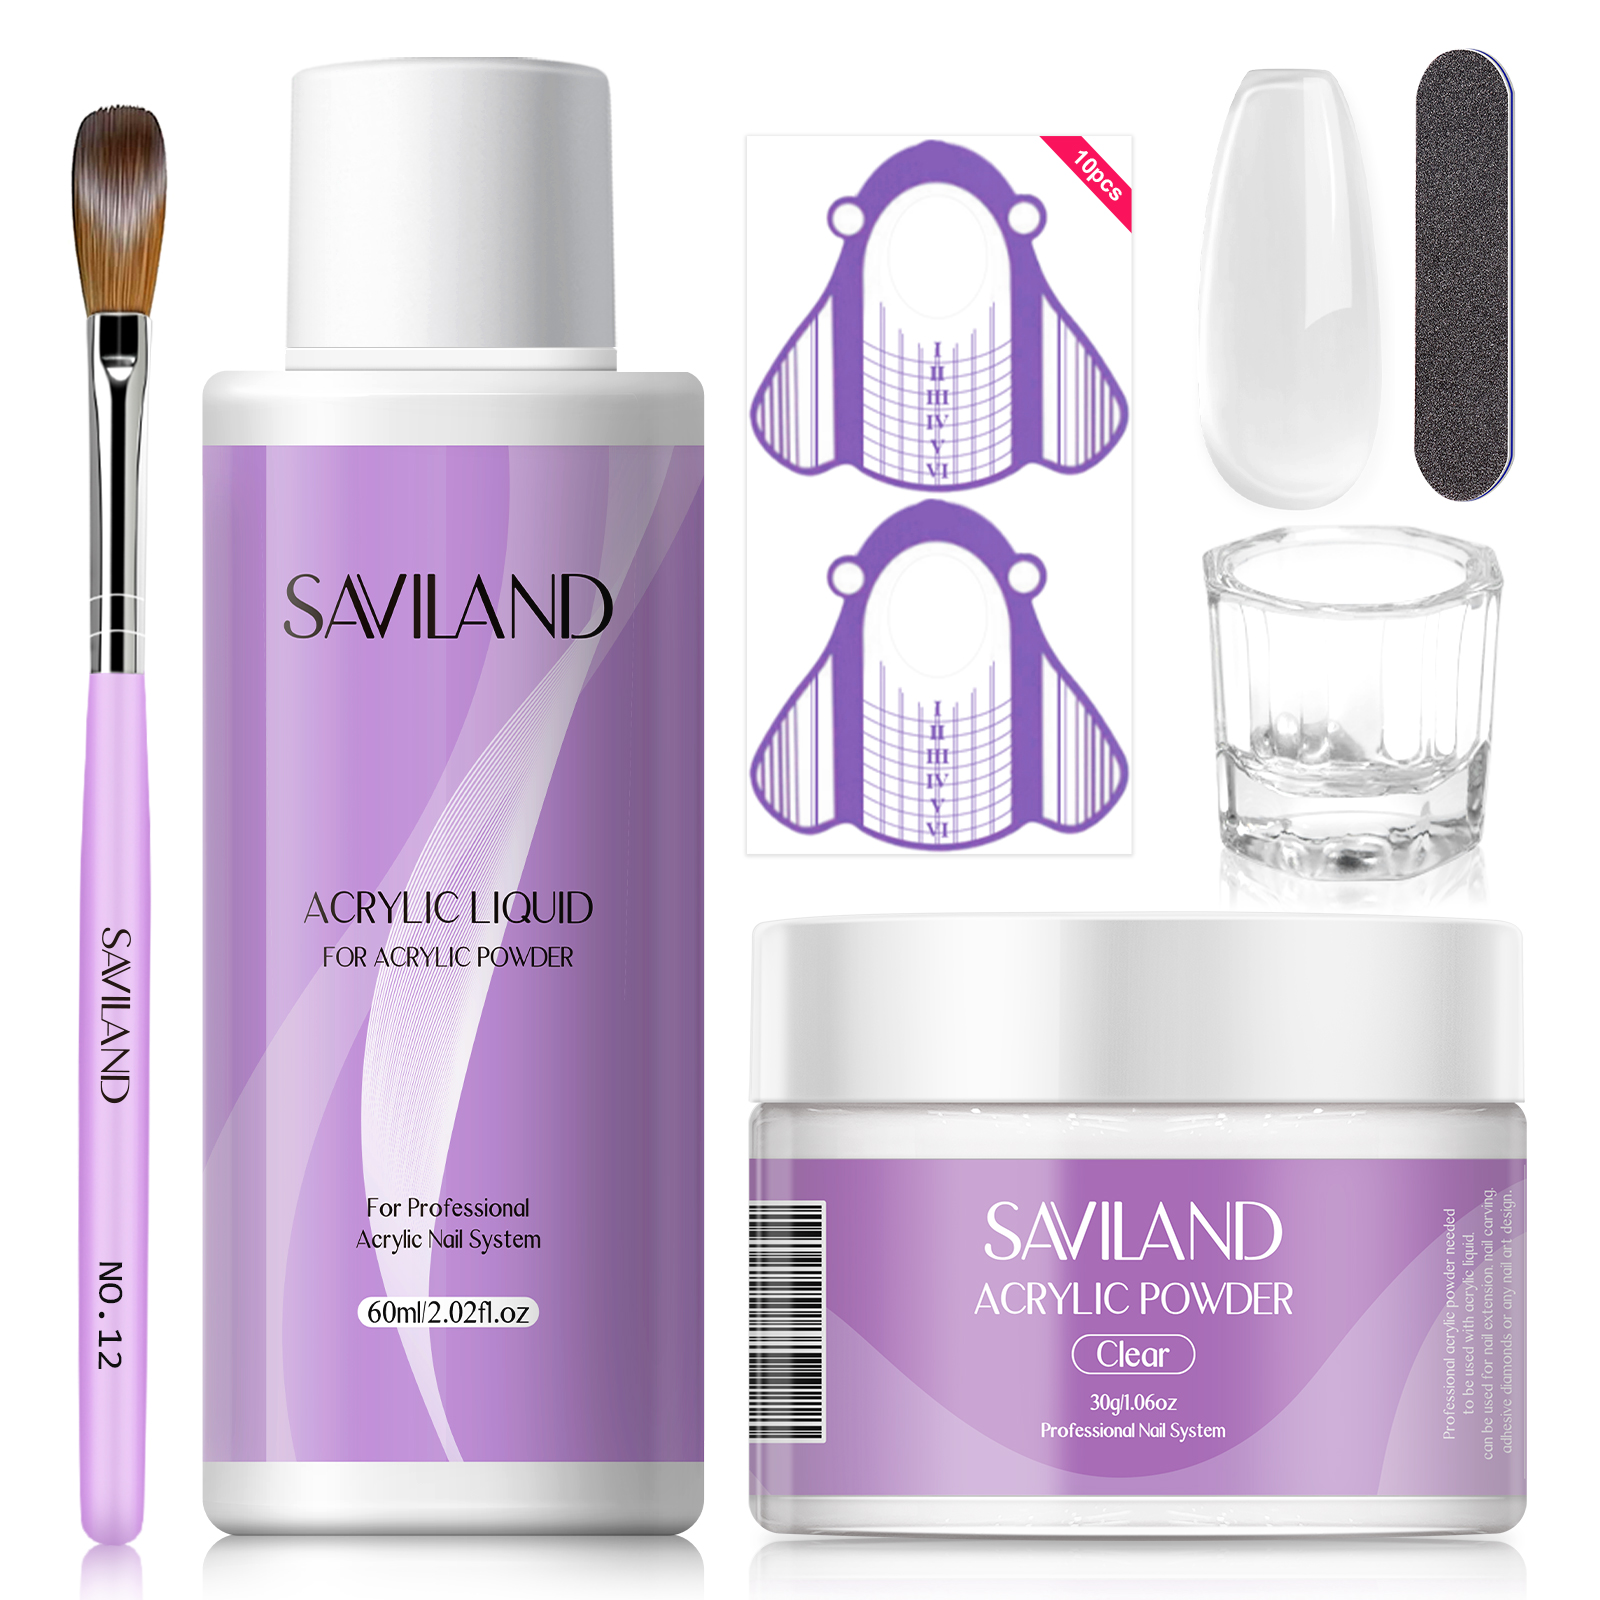 Saviland Acrylic Nail Kit - Clear Acrylic Powder and Acrylic Liquid Set with Acrylic Nail Brush Nail Forms for Beginners - image 1 of 8